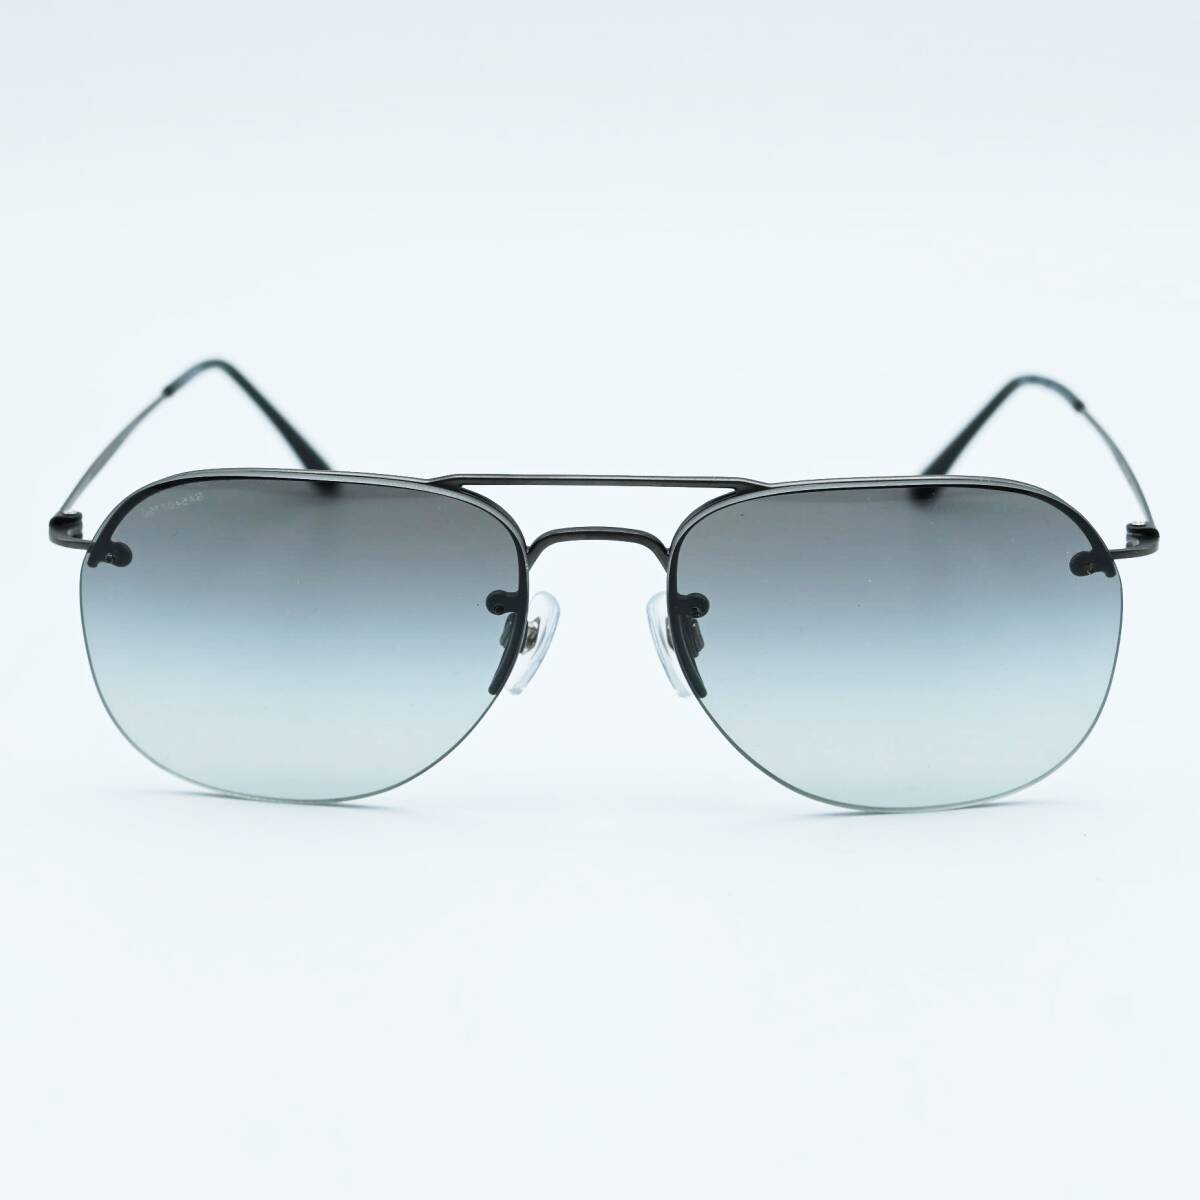 T05 GIORGIO ARMANIjoru geo Armani Teardrop половинчатая оправа солнцезащитные очки черный AR6004-T